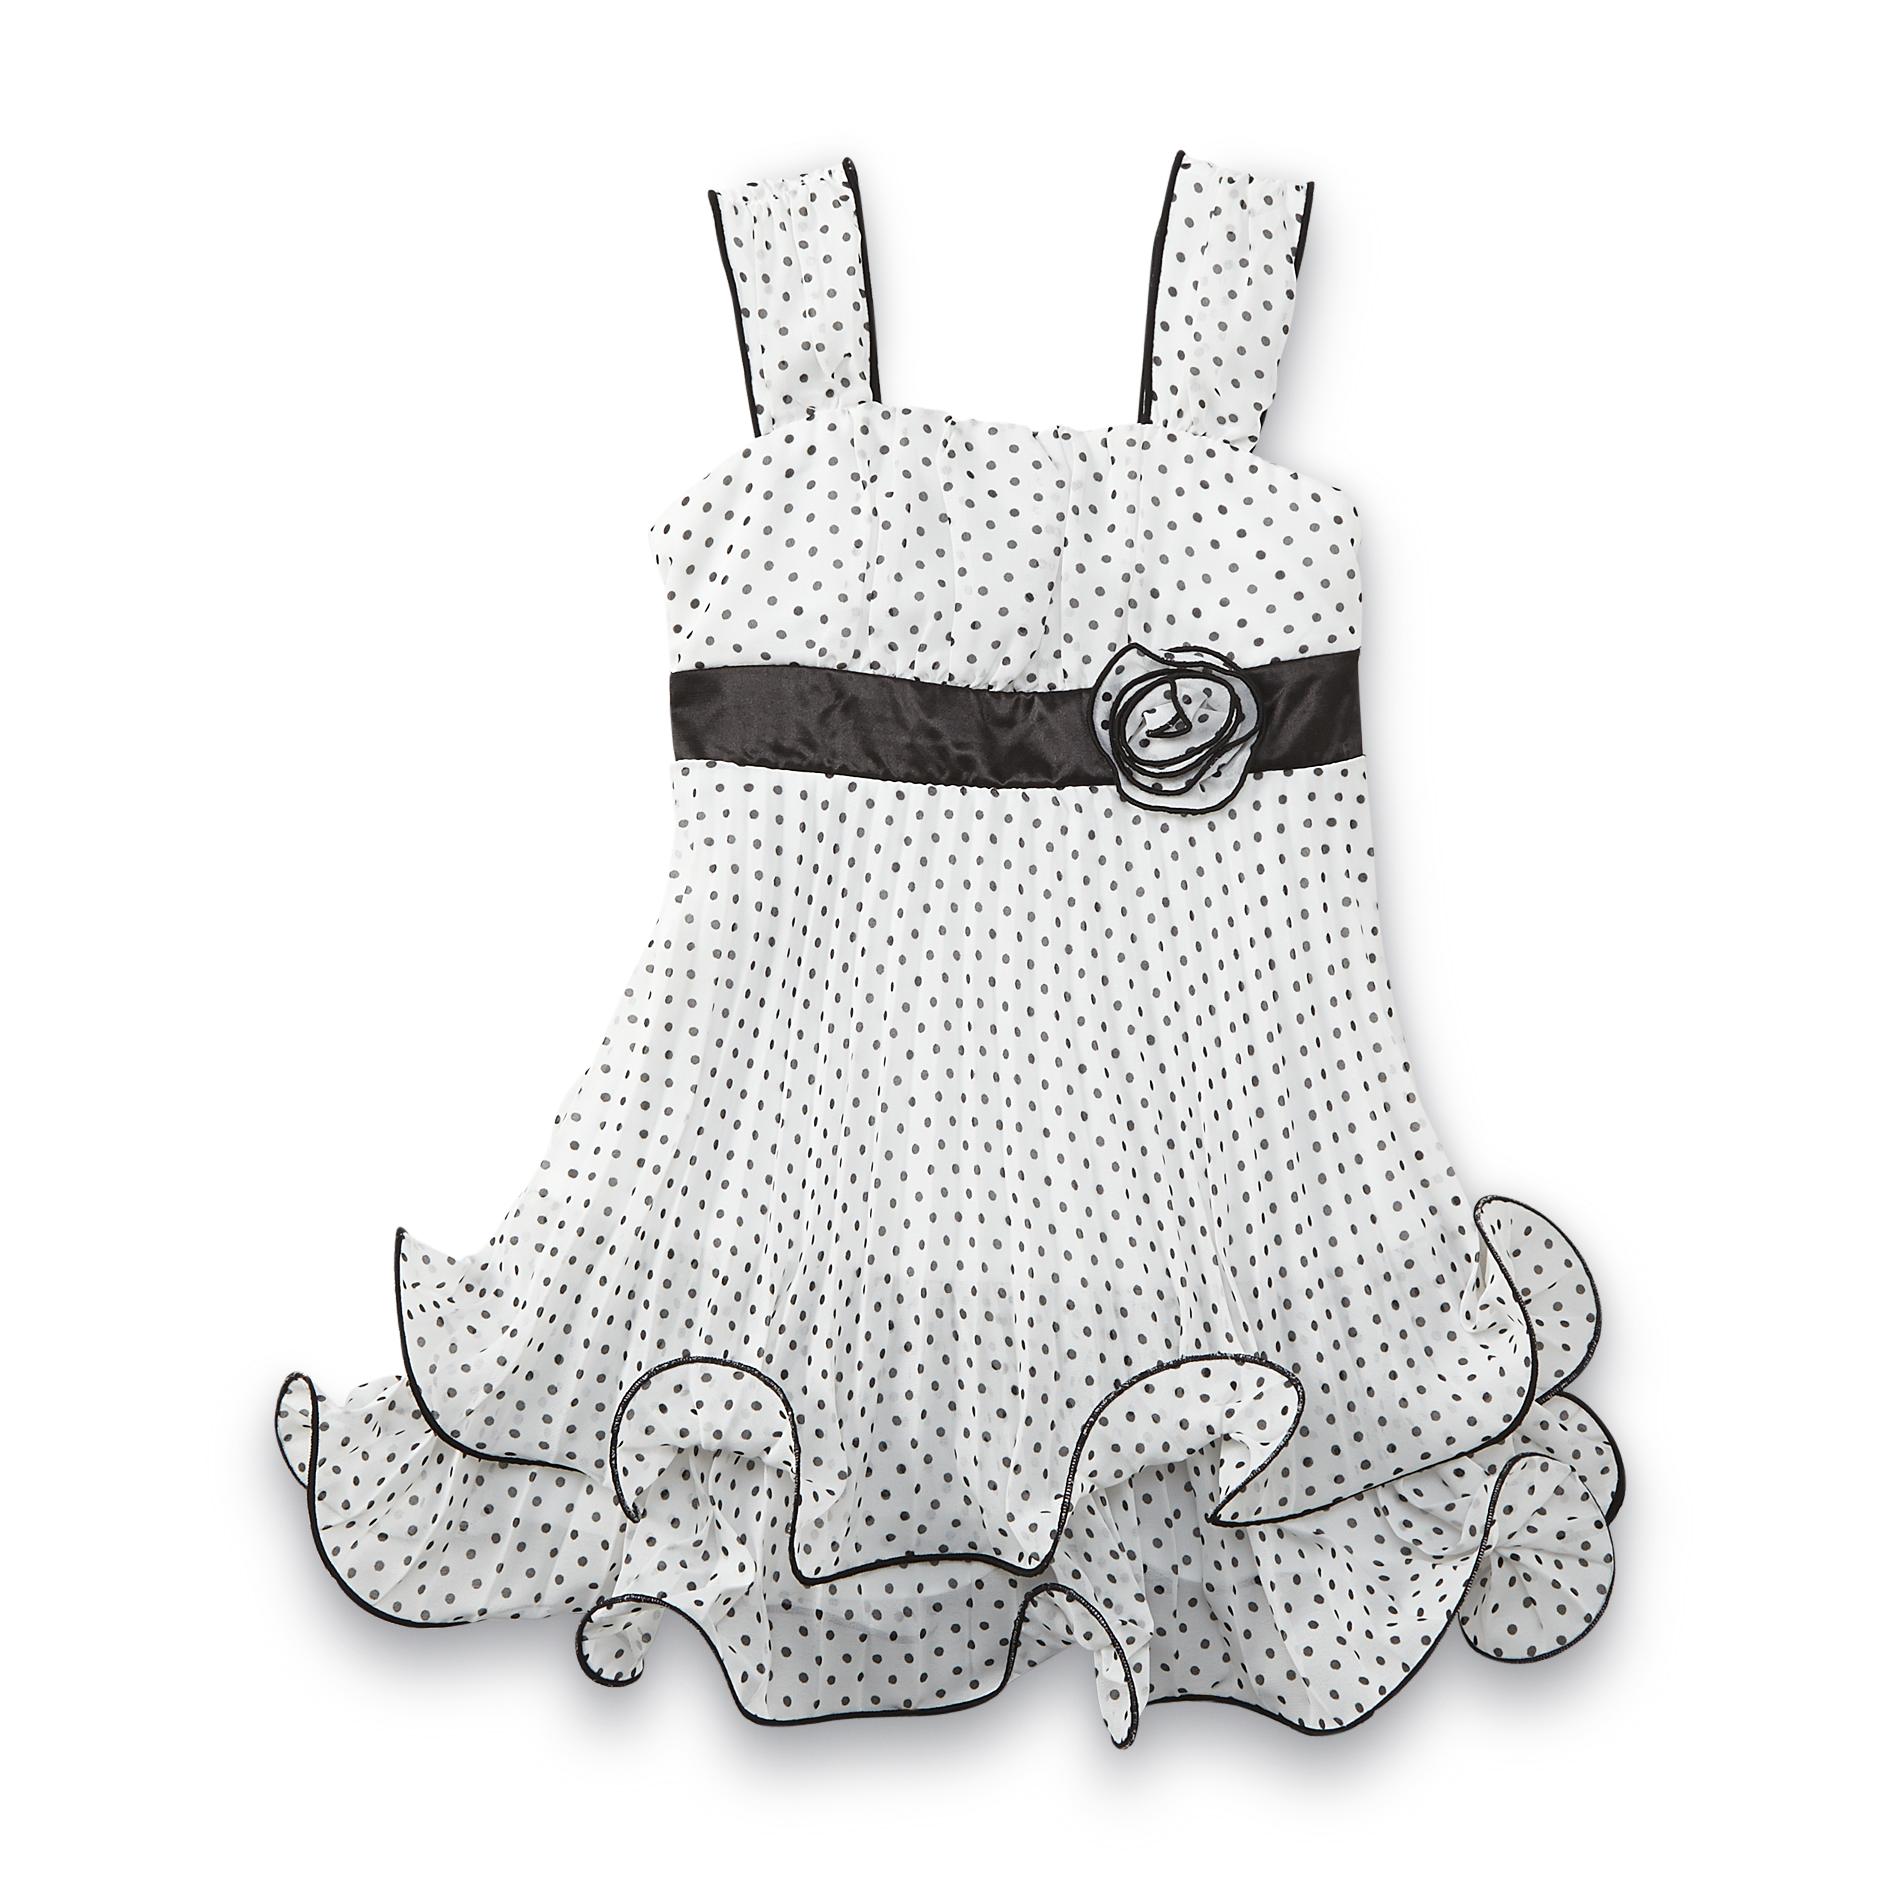 Amy's Closet Toddler Girl's Pleated Chiffon Dress - Polka Dot